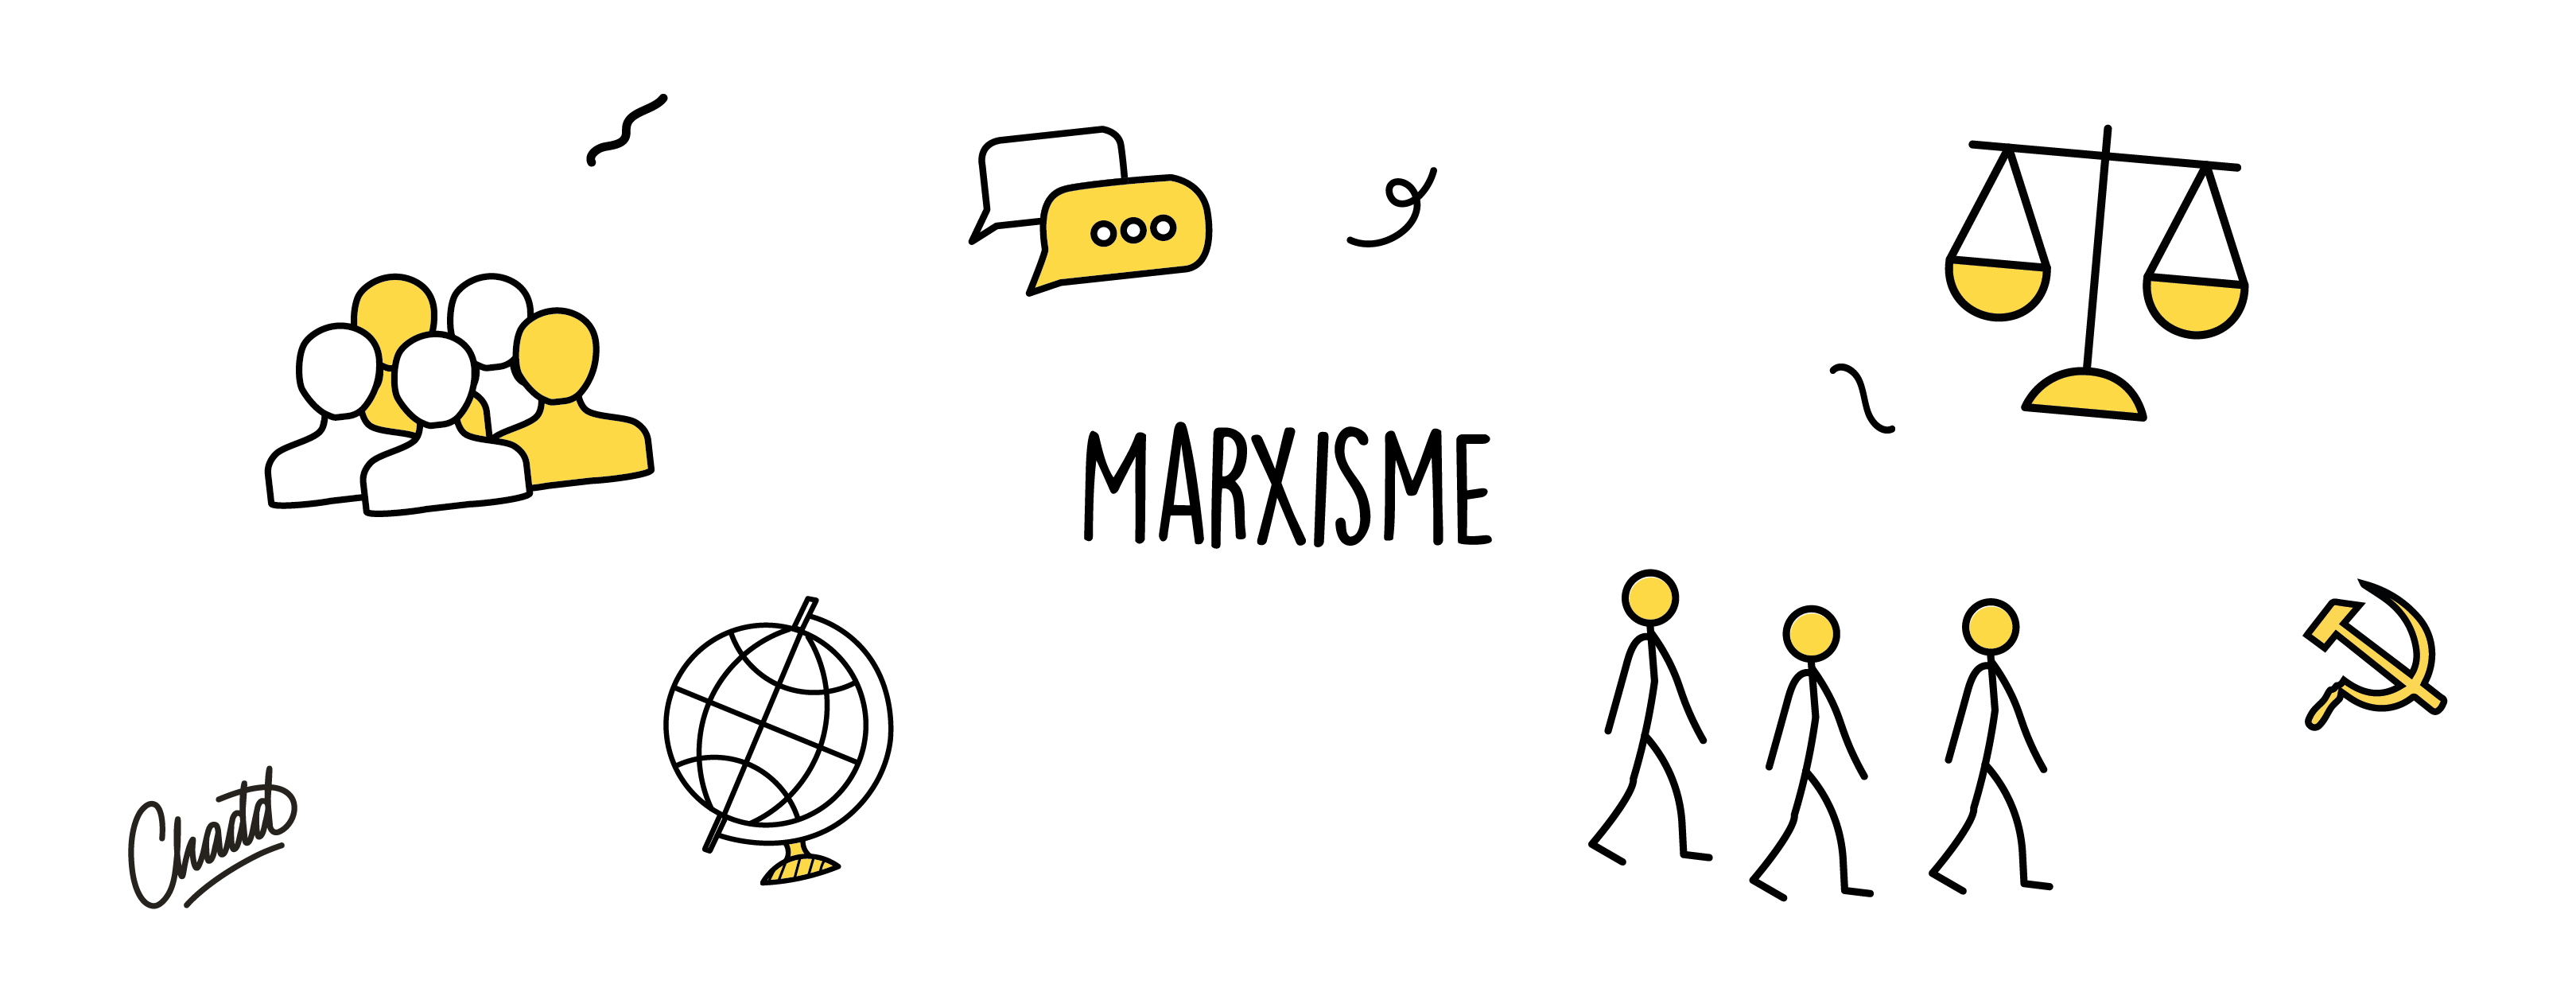 marxisme